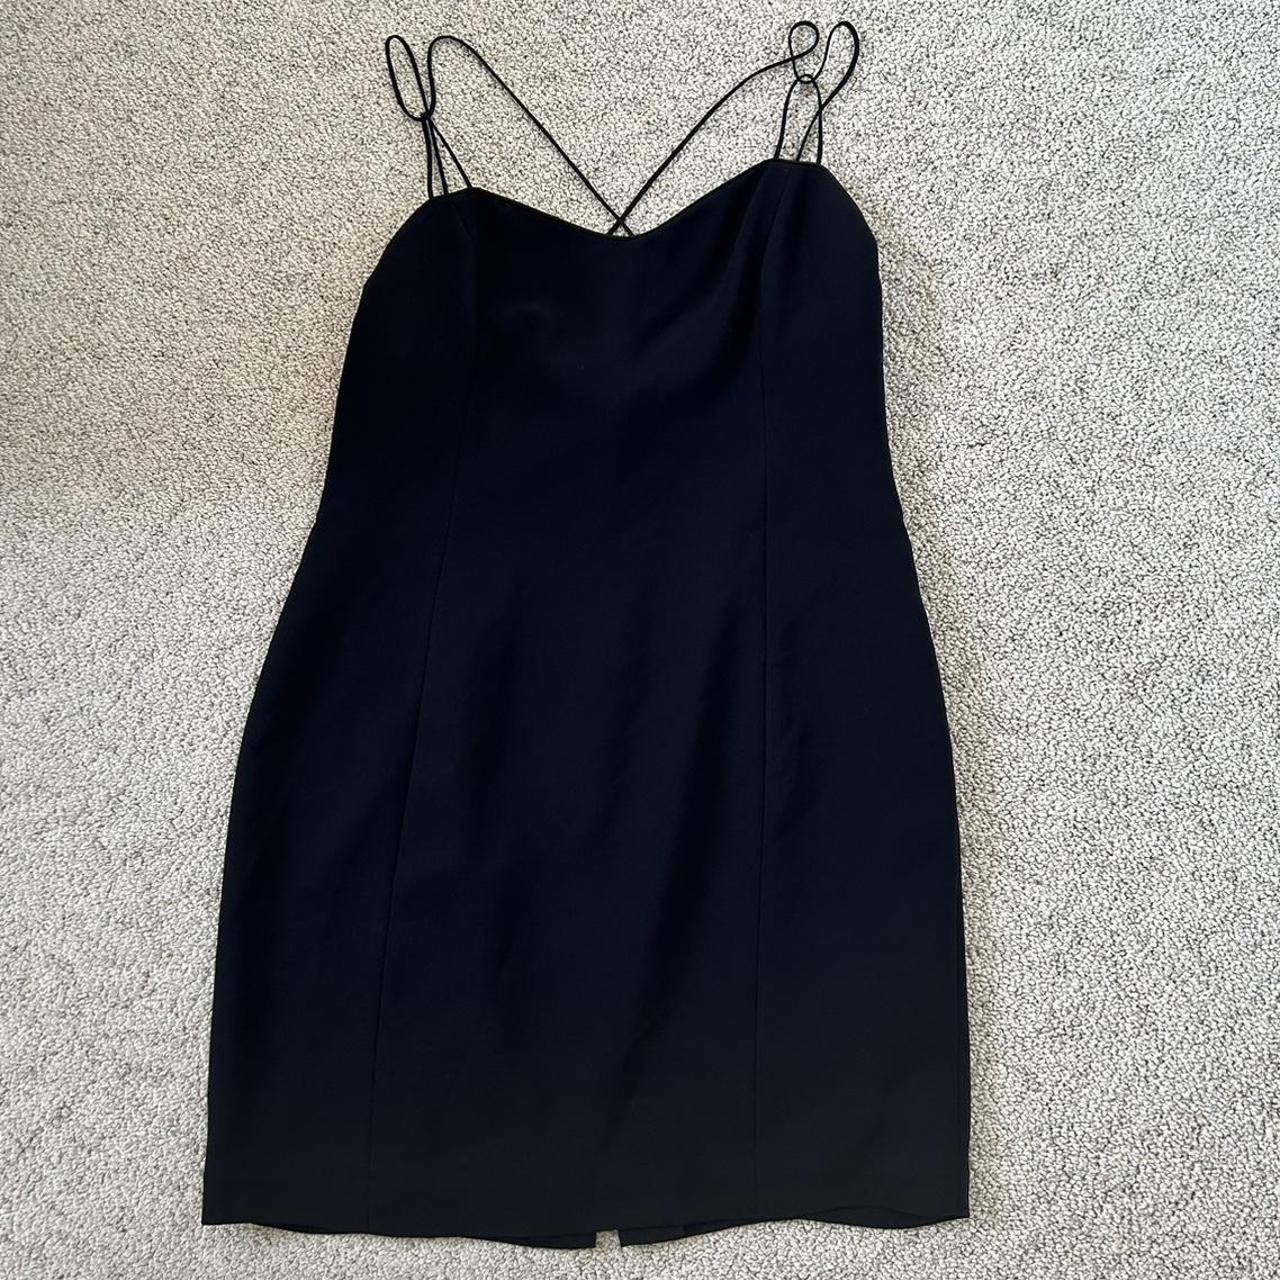 Jones New York black mini dress 18.5in waist 38.5in... - Depop